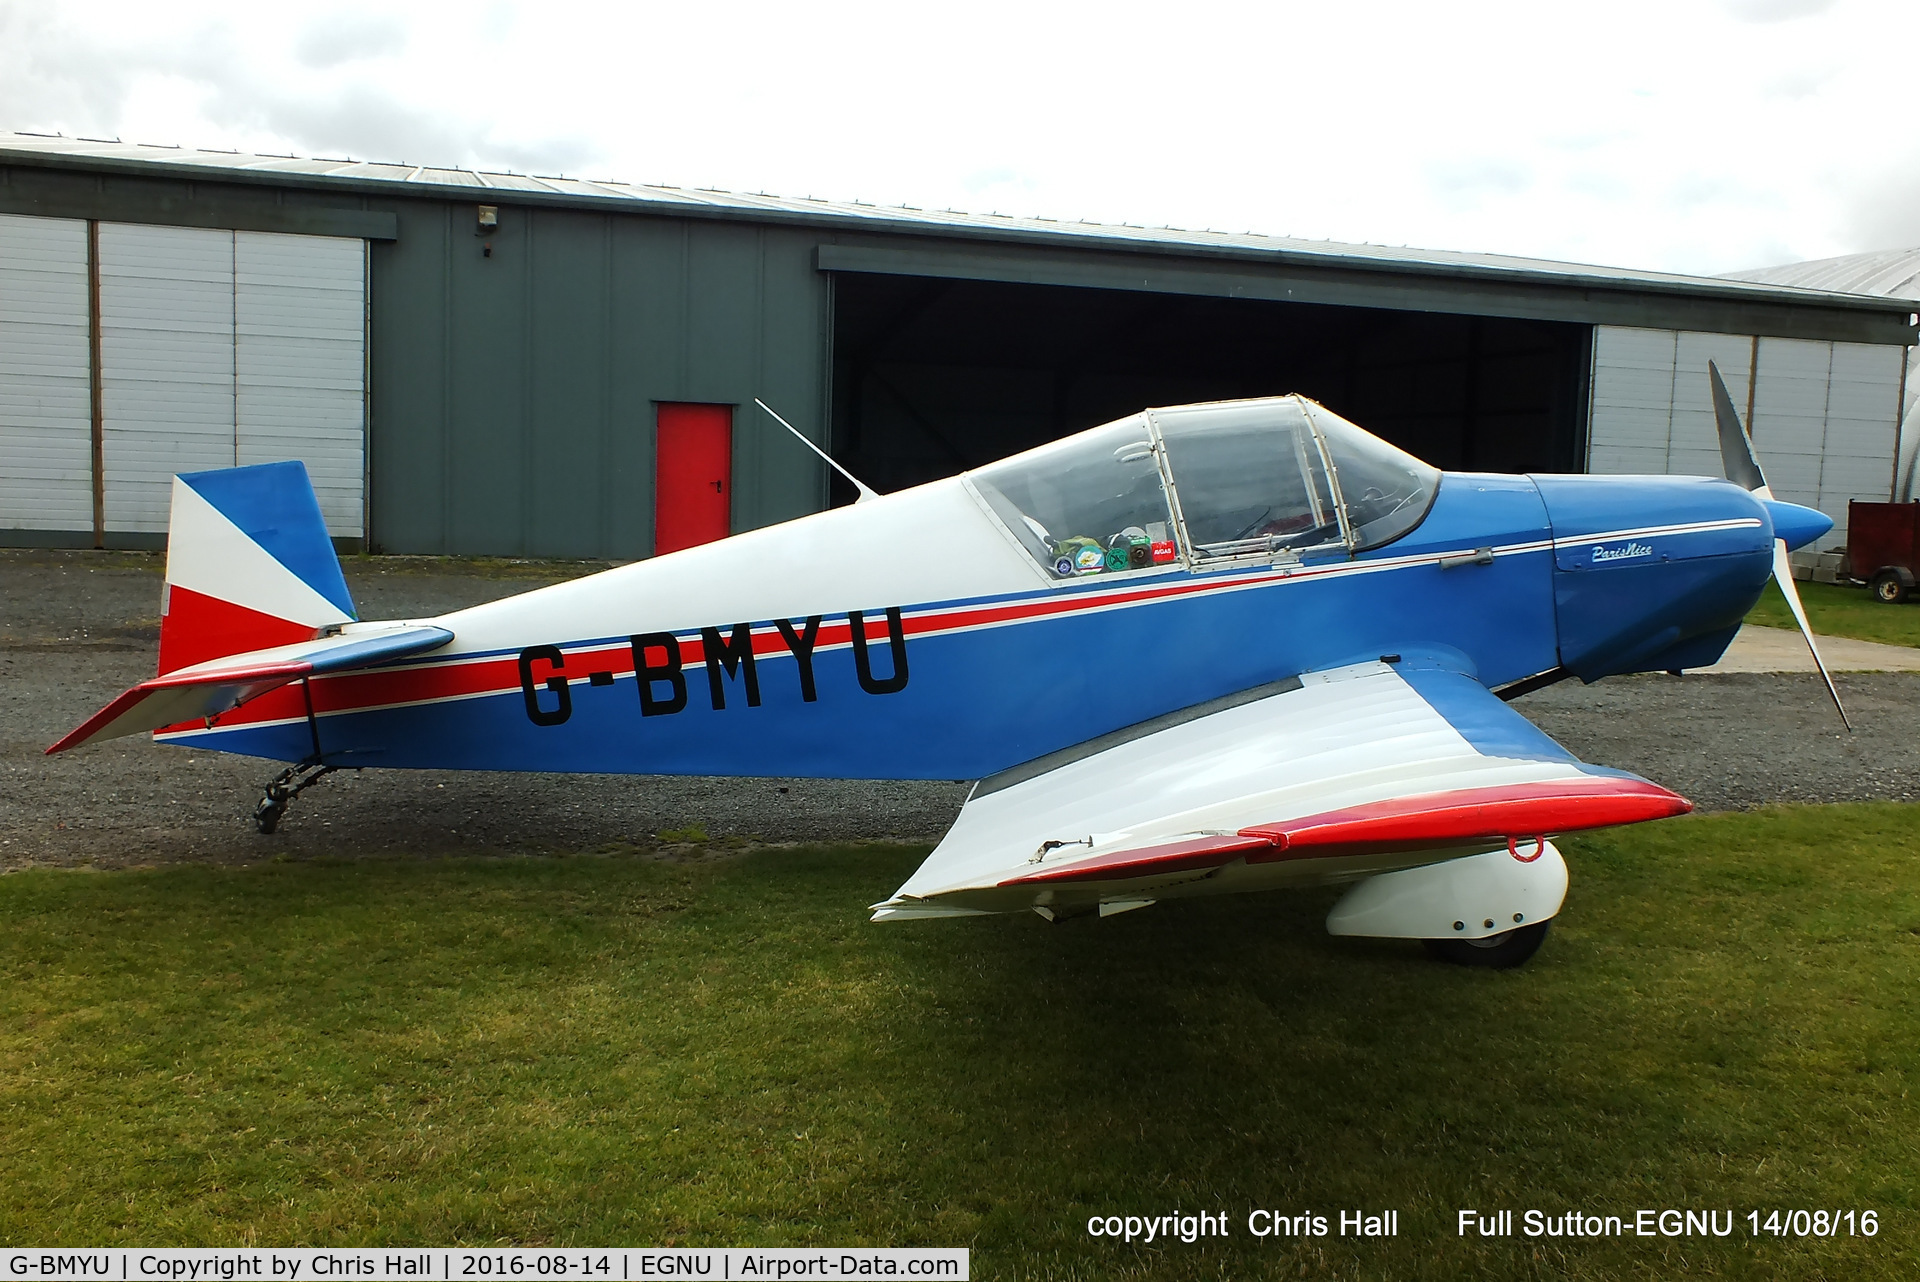 G-BMYU, 1965 Wassmer (Jodel) D-120 Paris-Nice C/N 289, at the LAA Vale of York Strut fly-in, Full Sutton